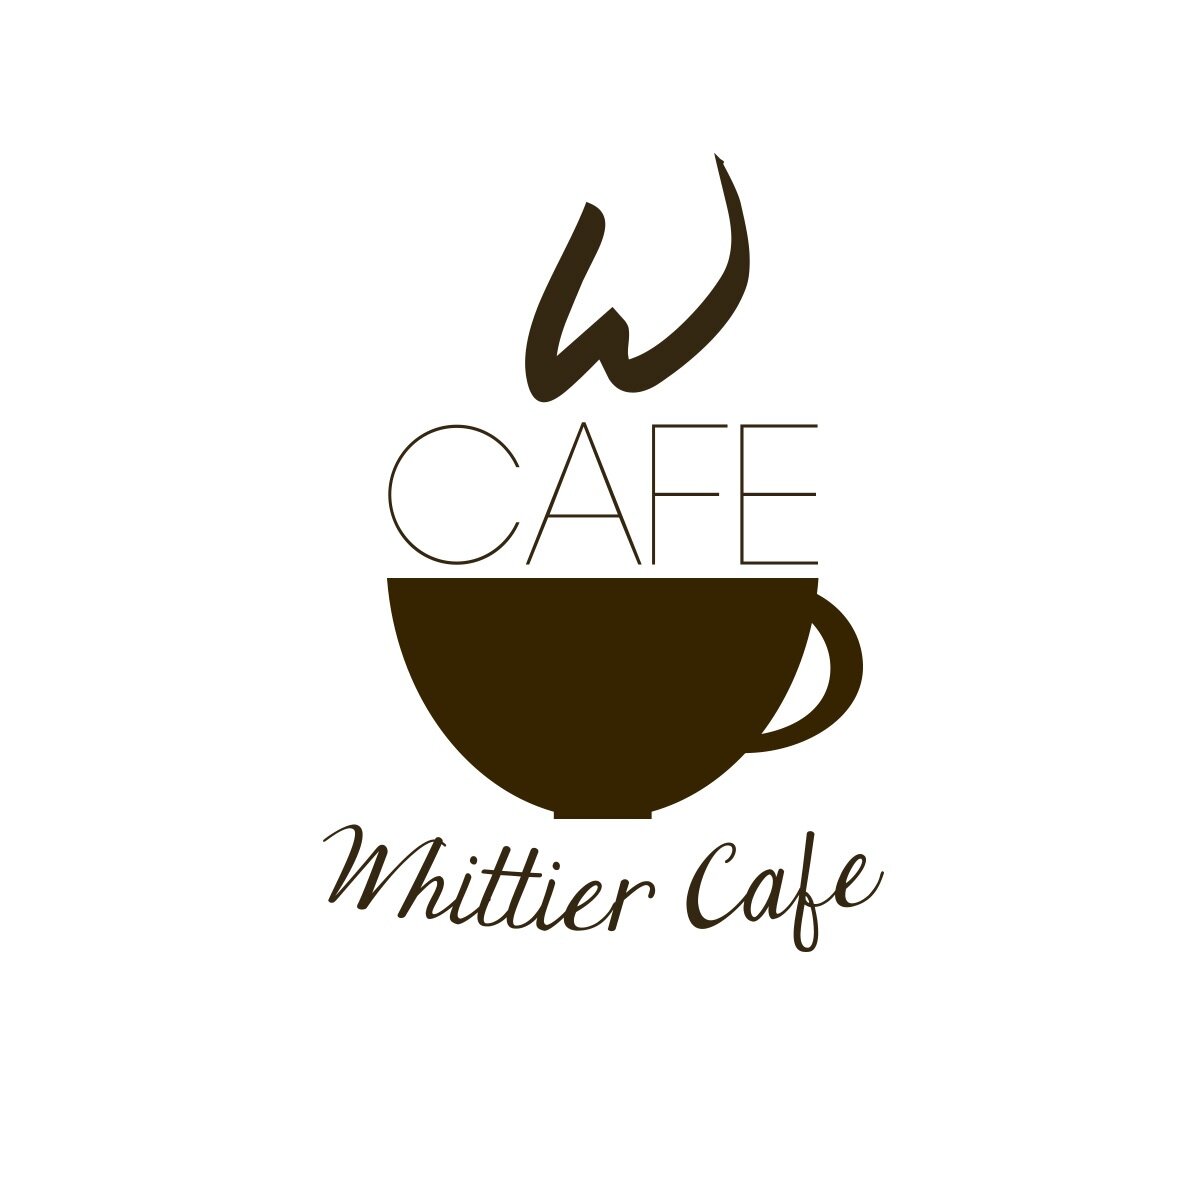 WhittierCafe_logo.jpg